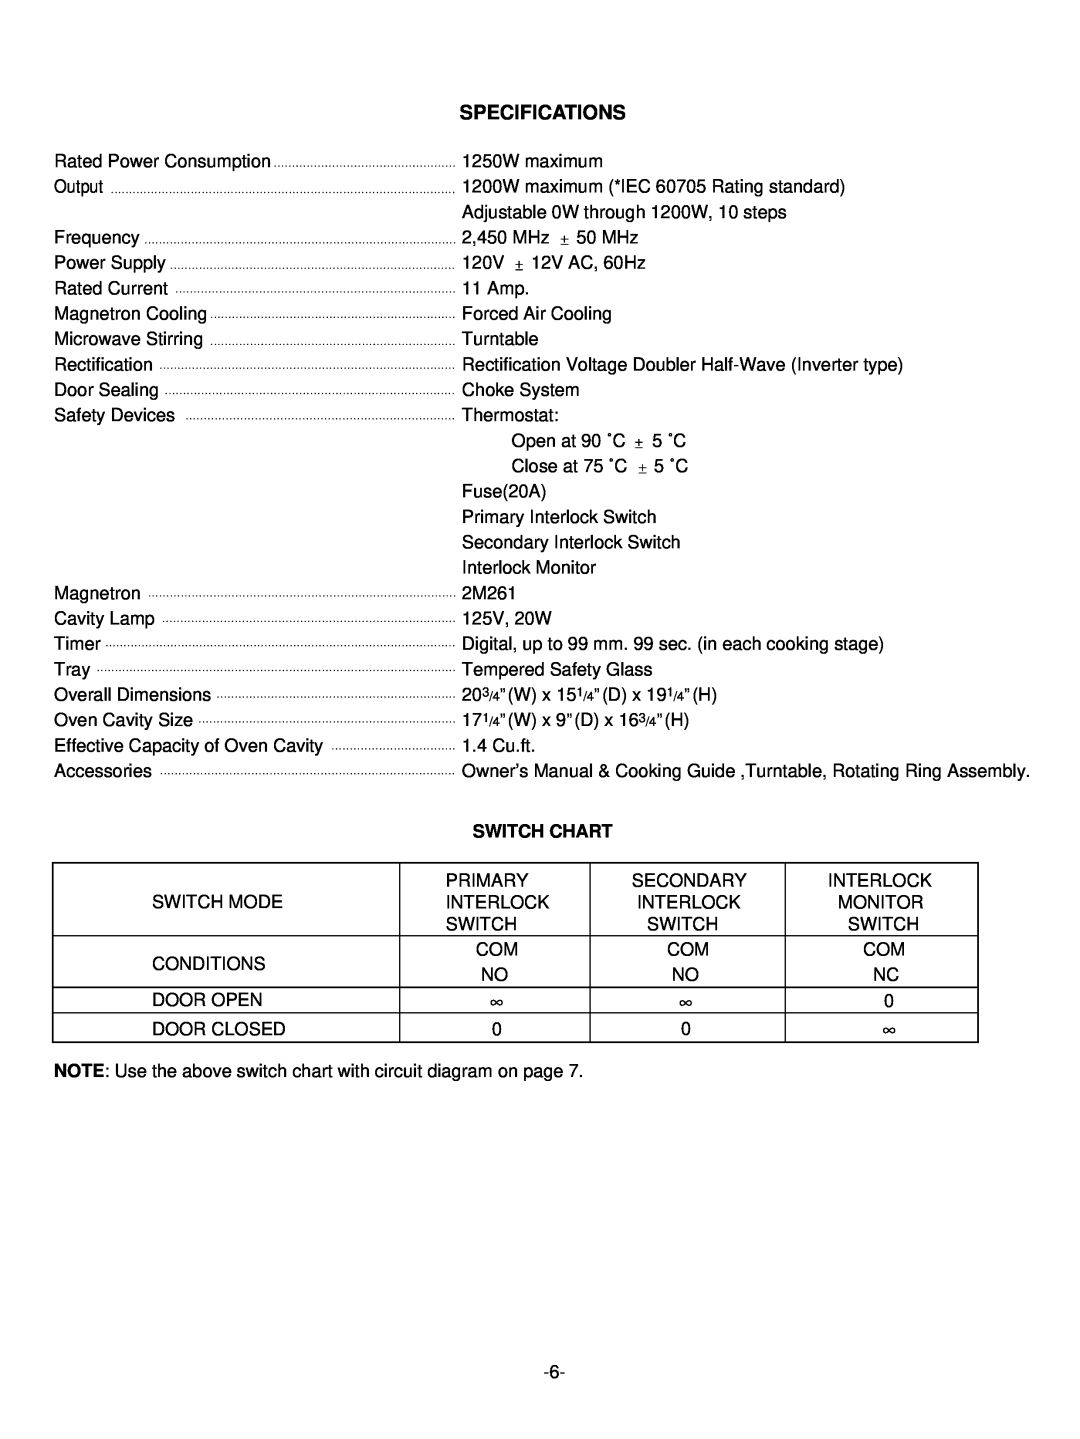 LG Electronics LRMM1430SB, LRMM1430SW manual Specifications, Switch Chart 